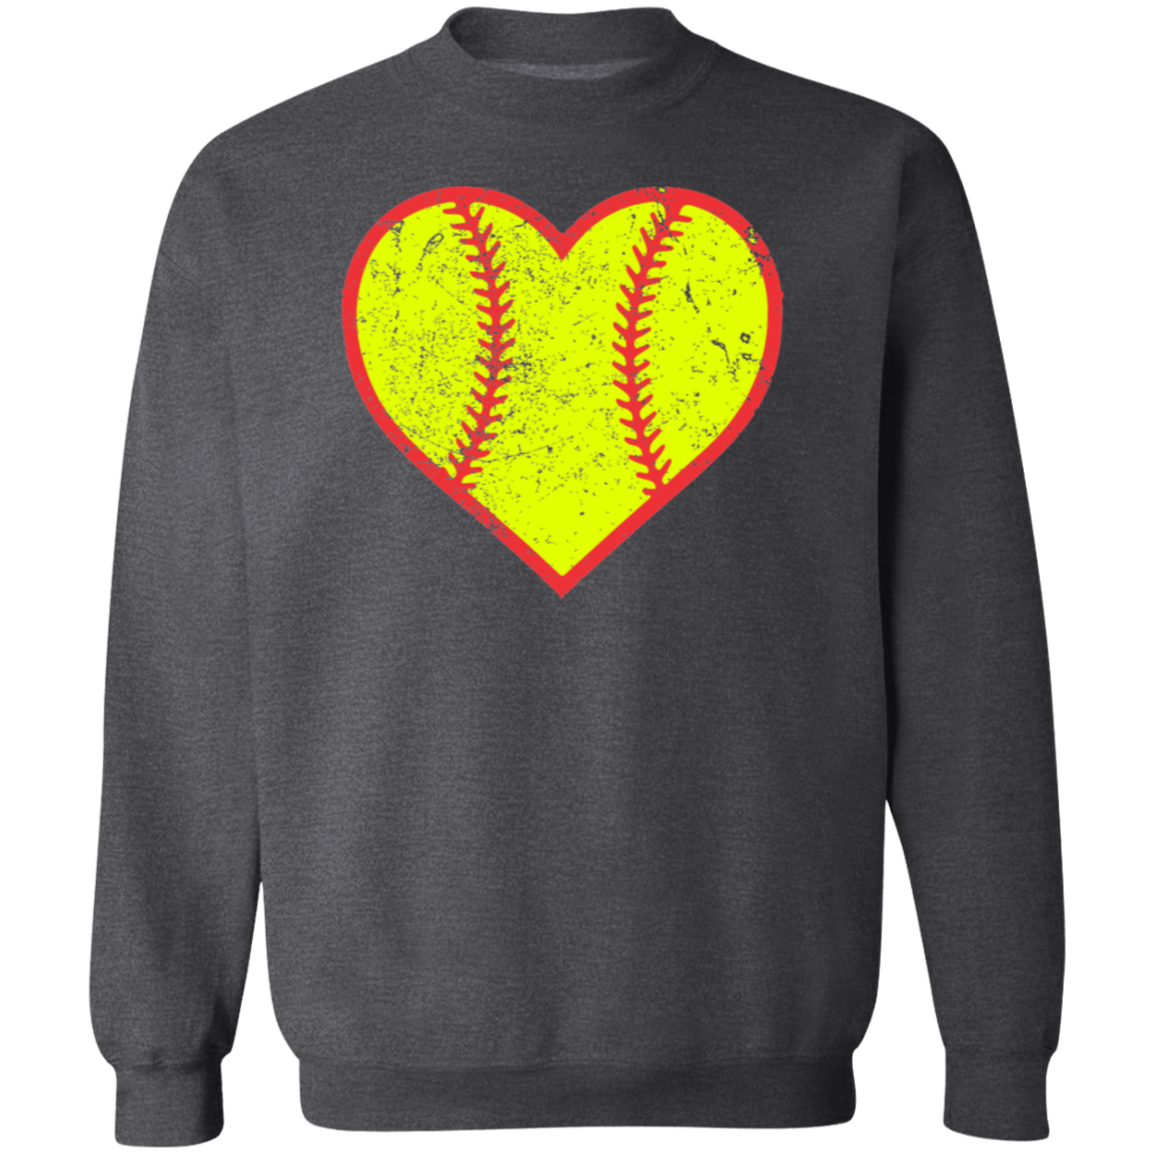 Softball Heart Design Premium Crew Neck Sweatshirt